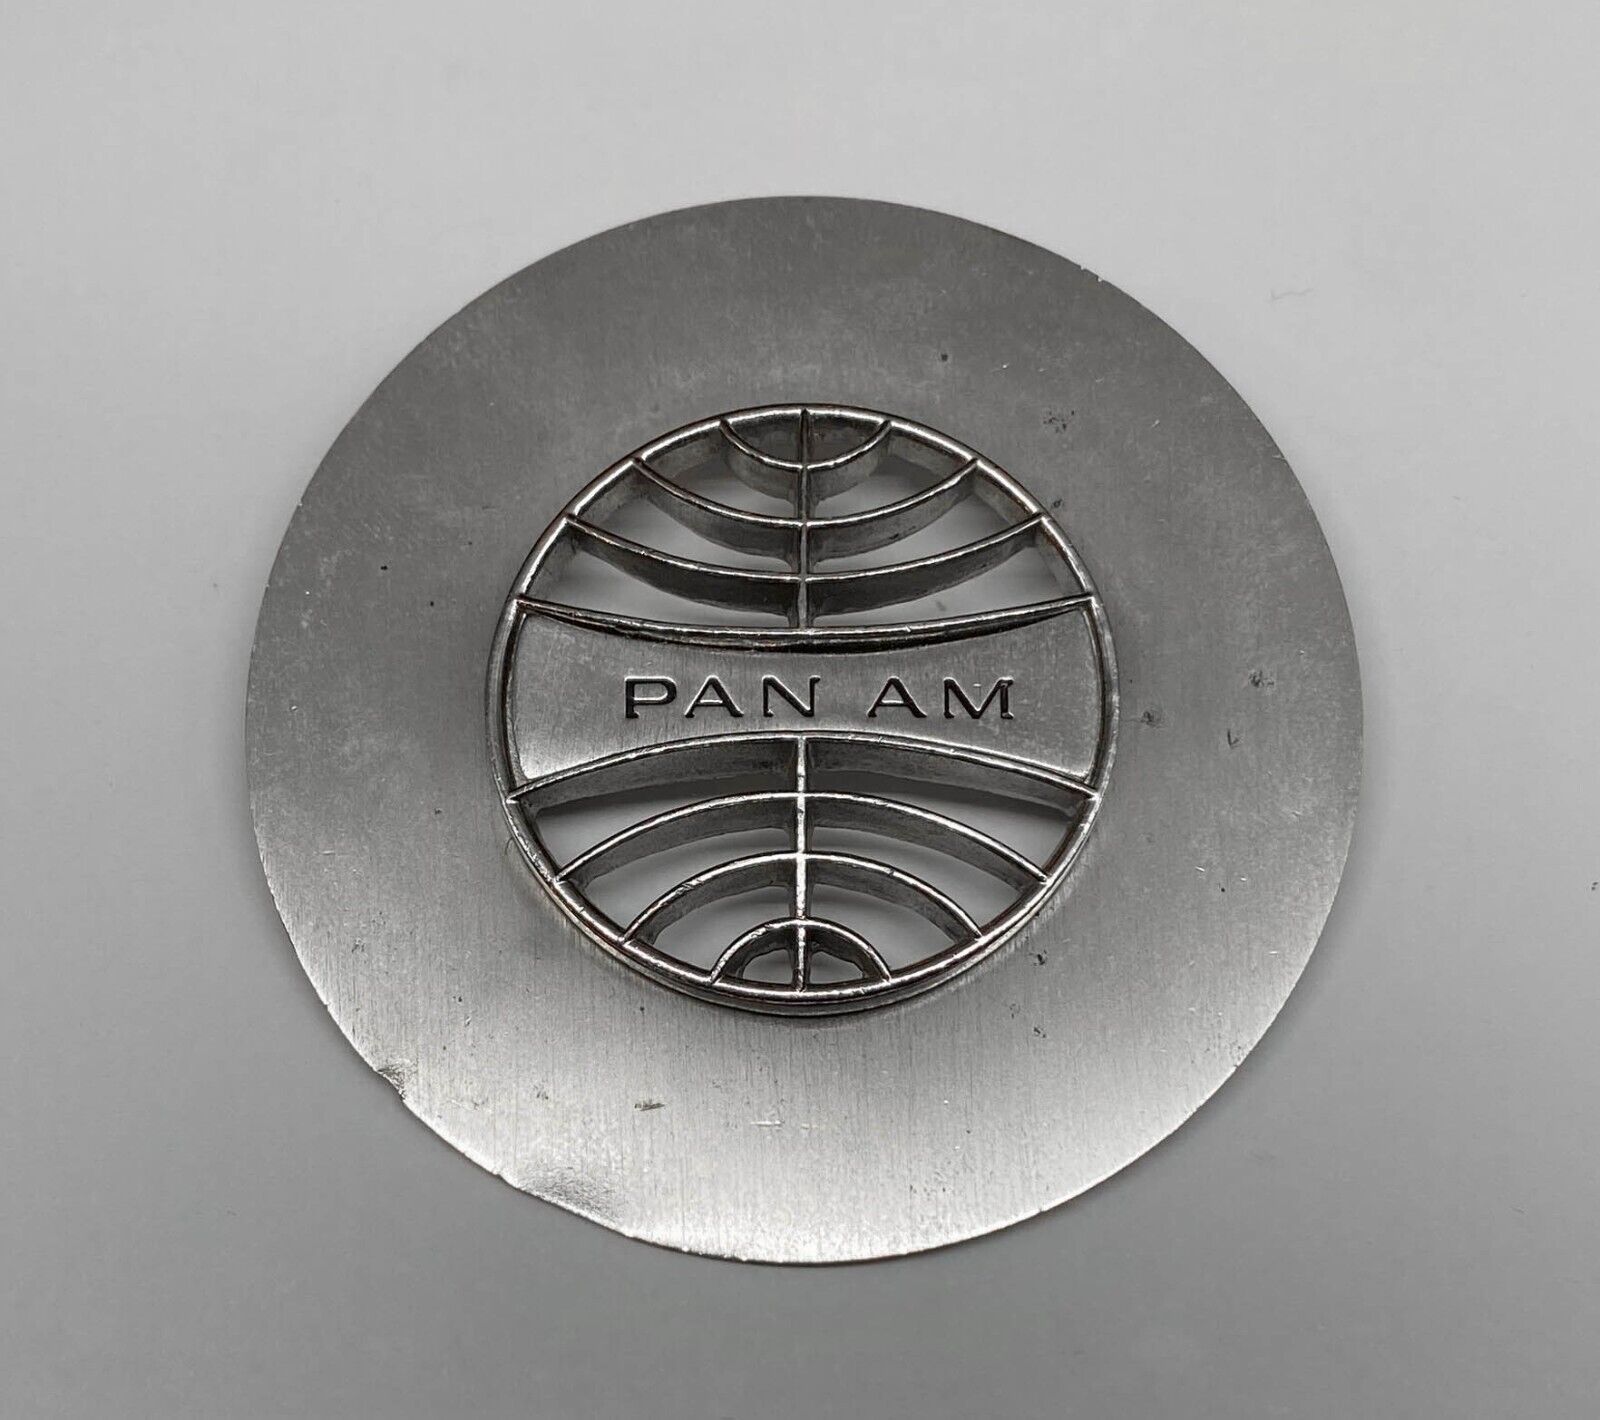 LARGE Vtg PAN AM Airlines Metal Badge Brooch Pin, Stewardess 1960s 1970s